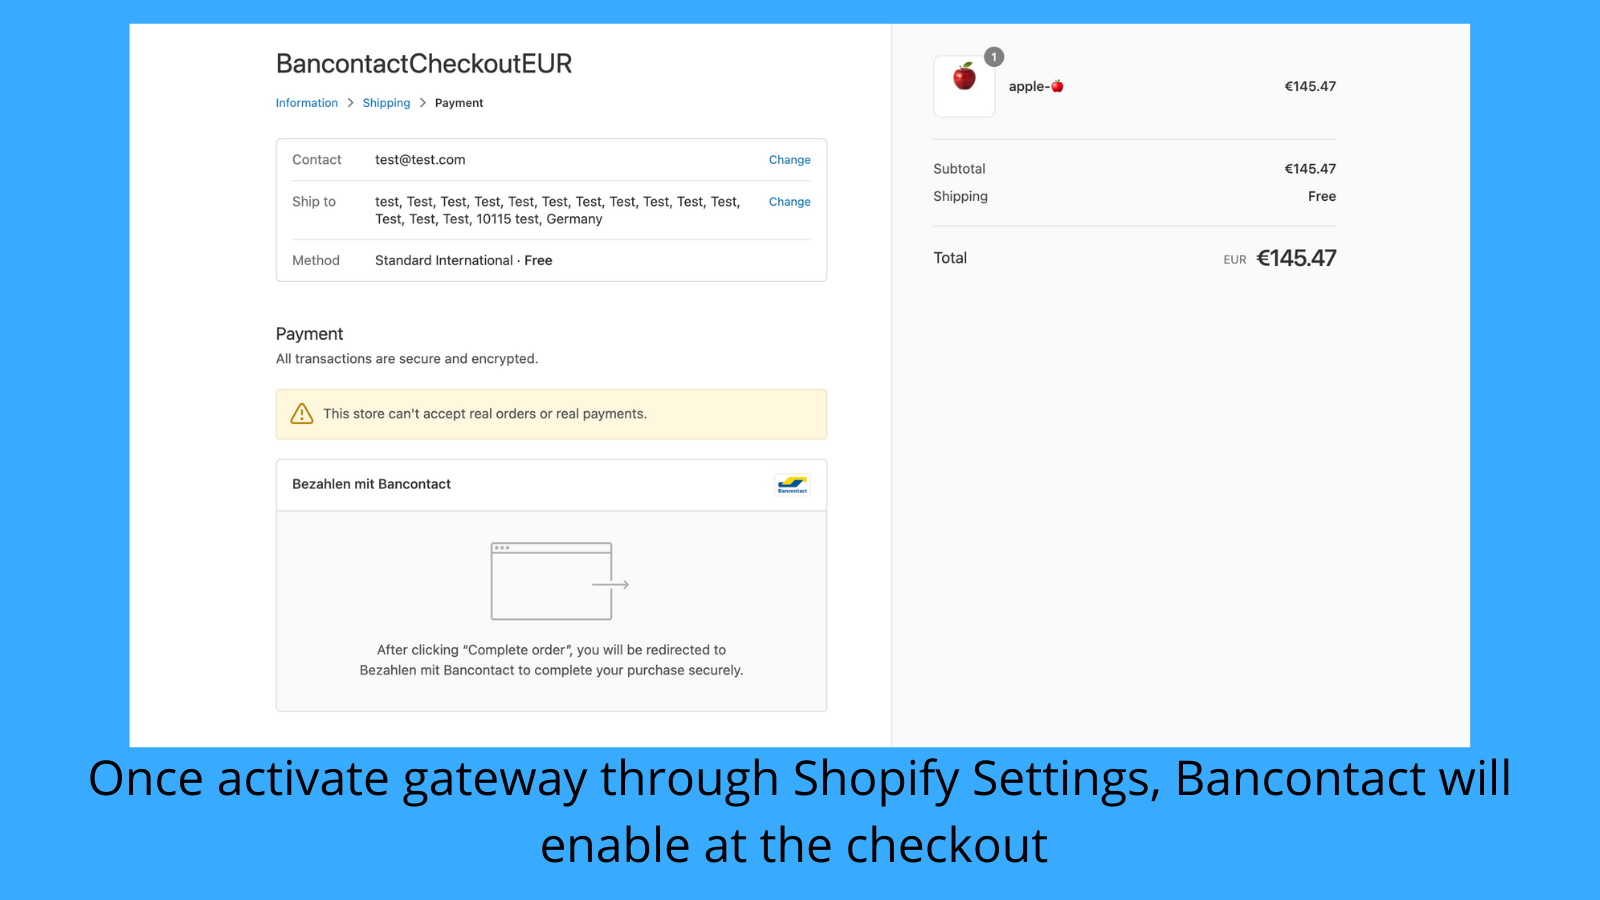 Enable Bancontact - Checkout.Com through Shopify Settings.